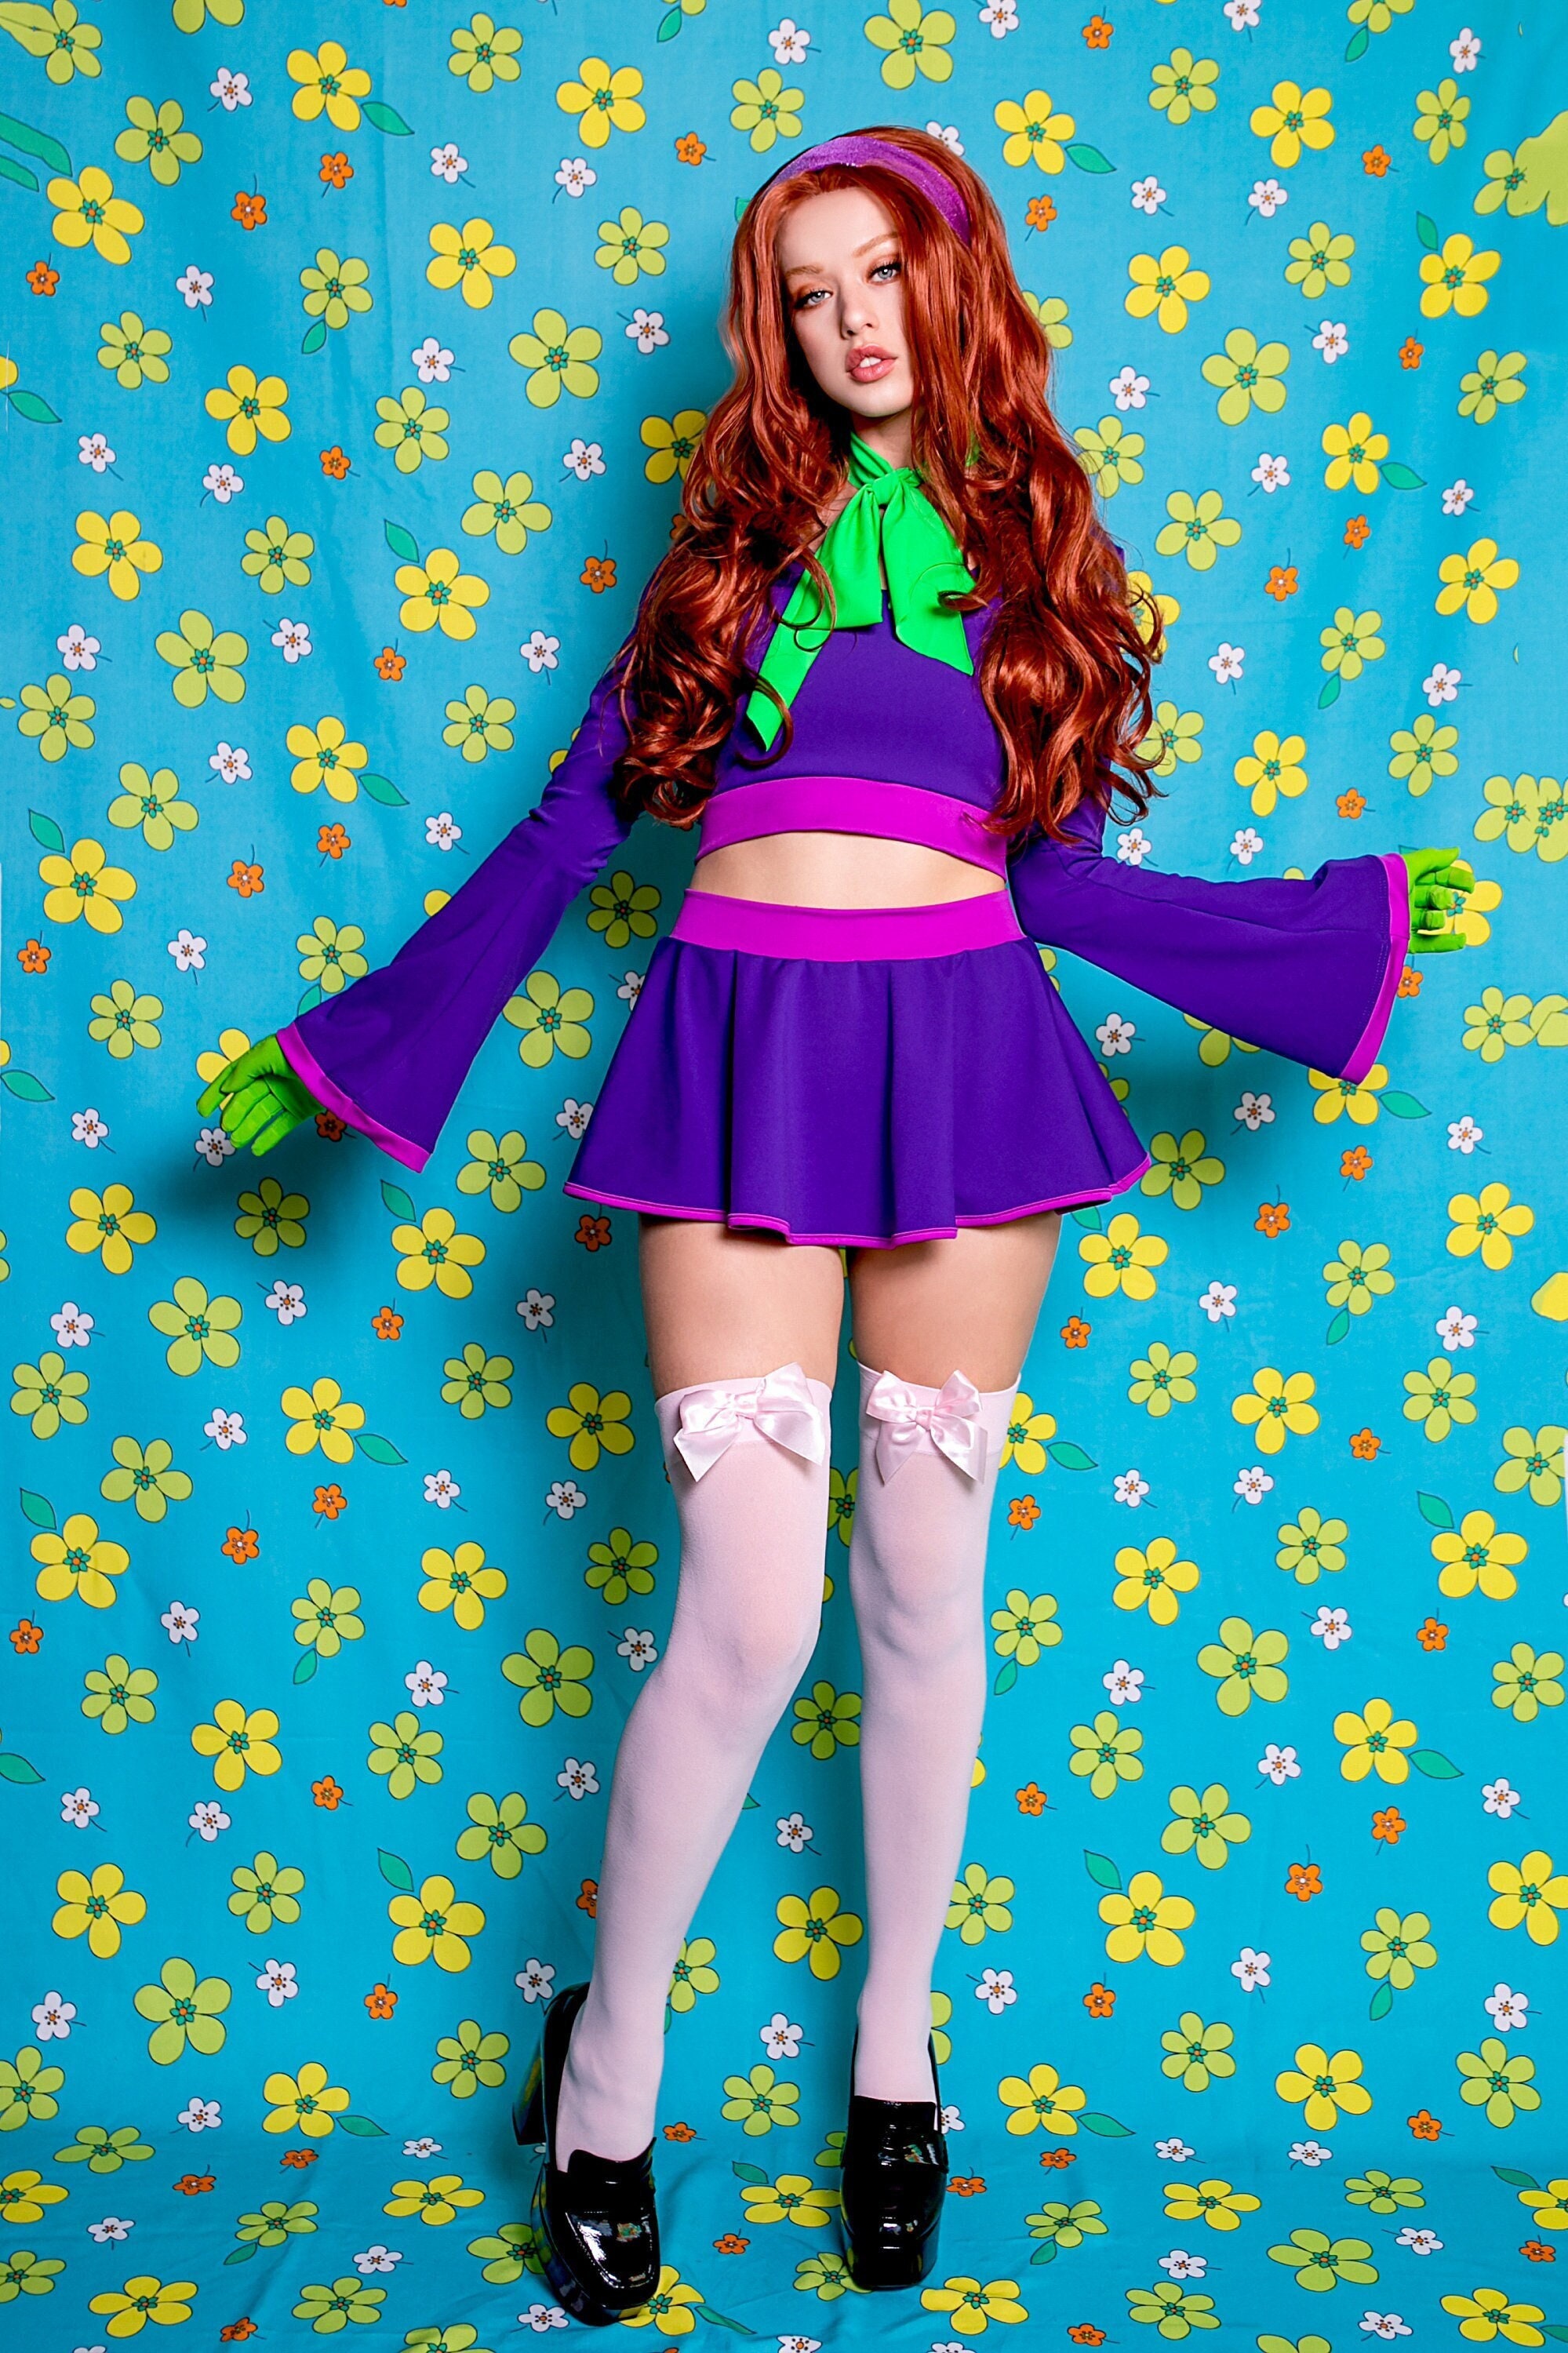 Velma Cosplay Costume Uniform Crop Top Skirt Outfits Halloween